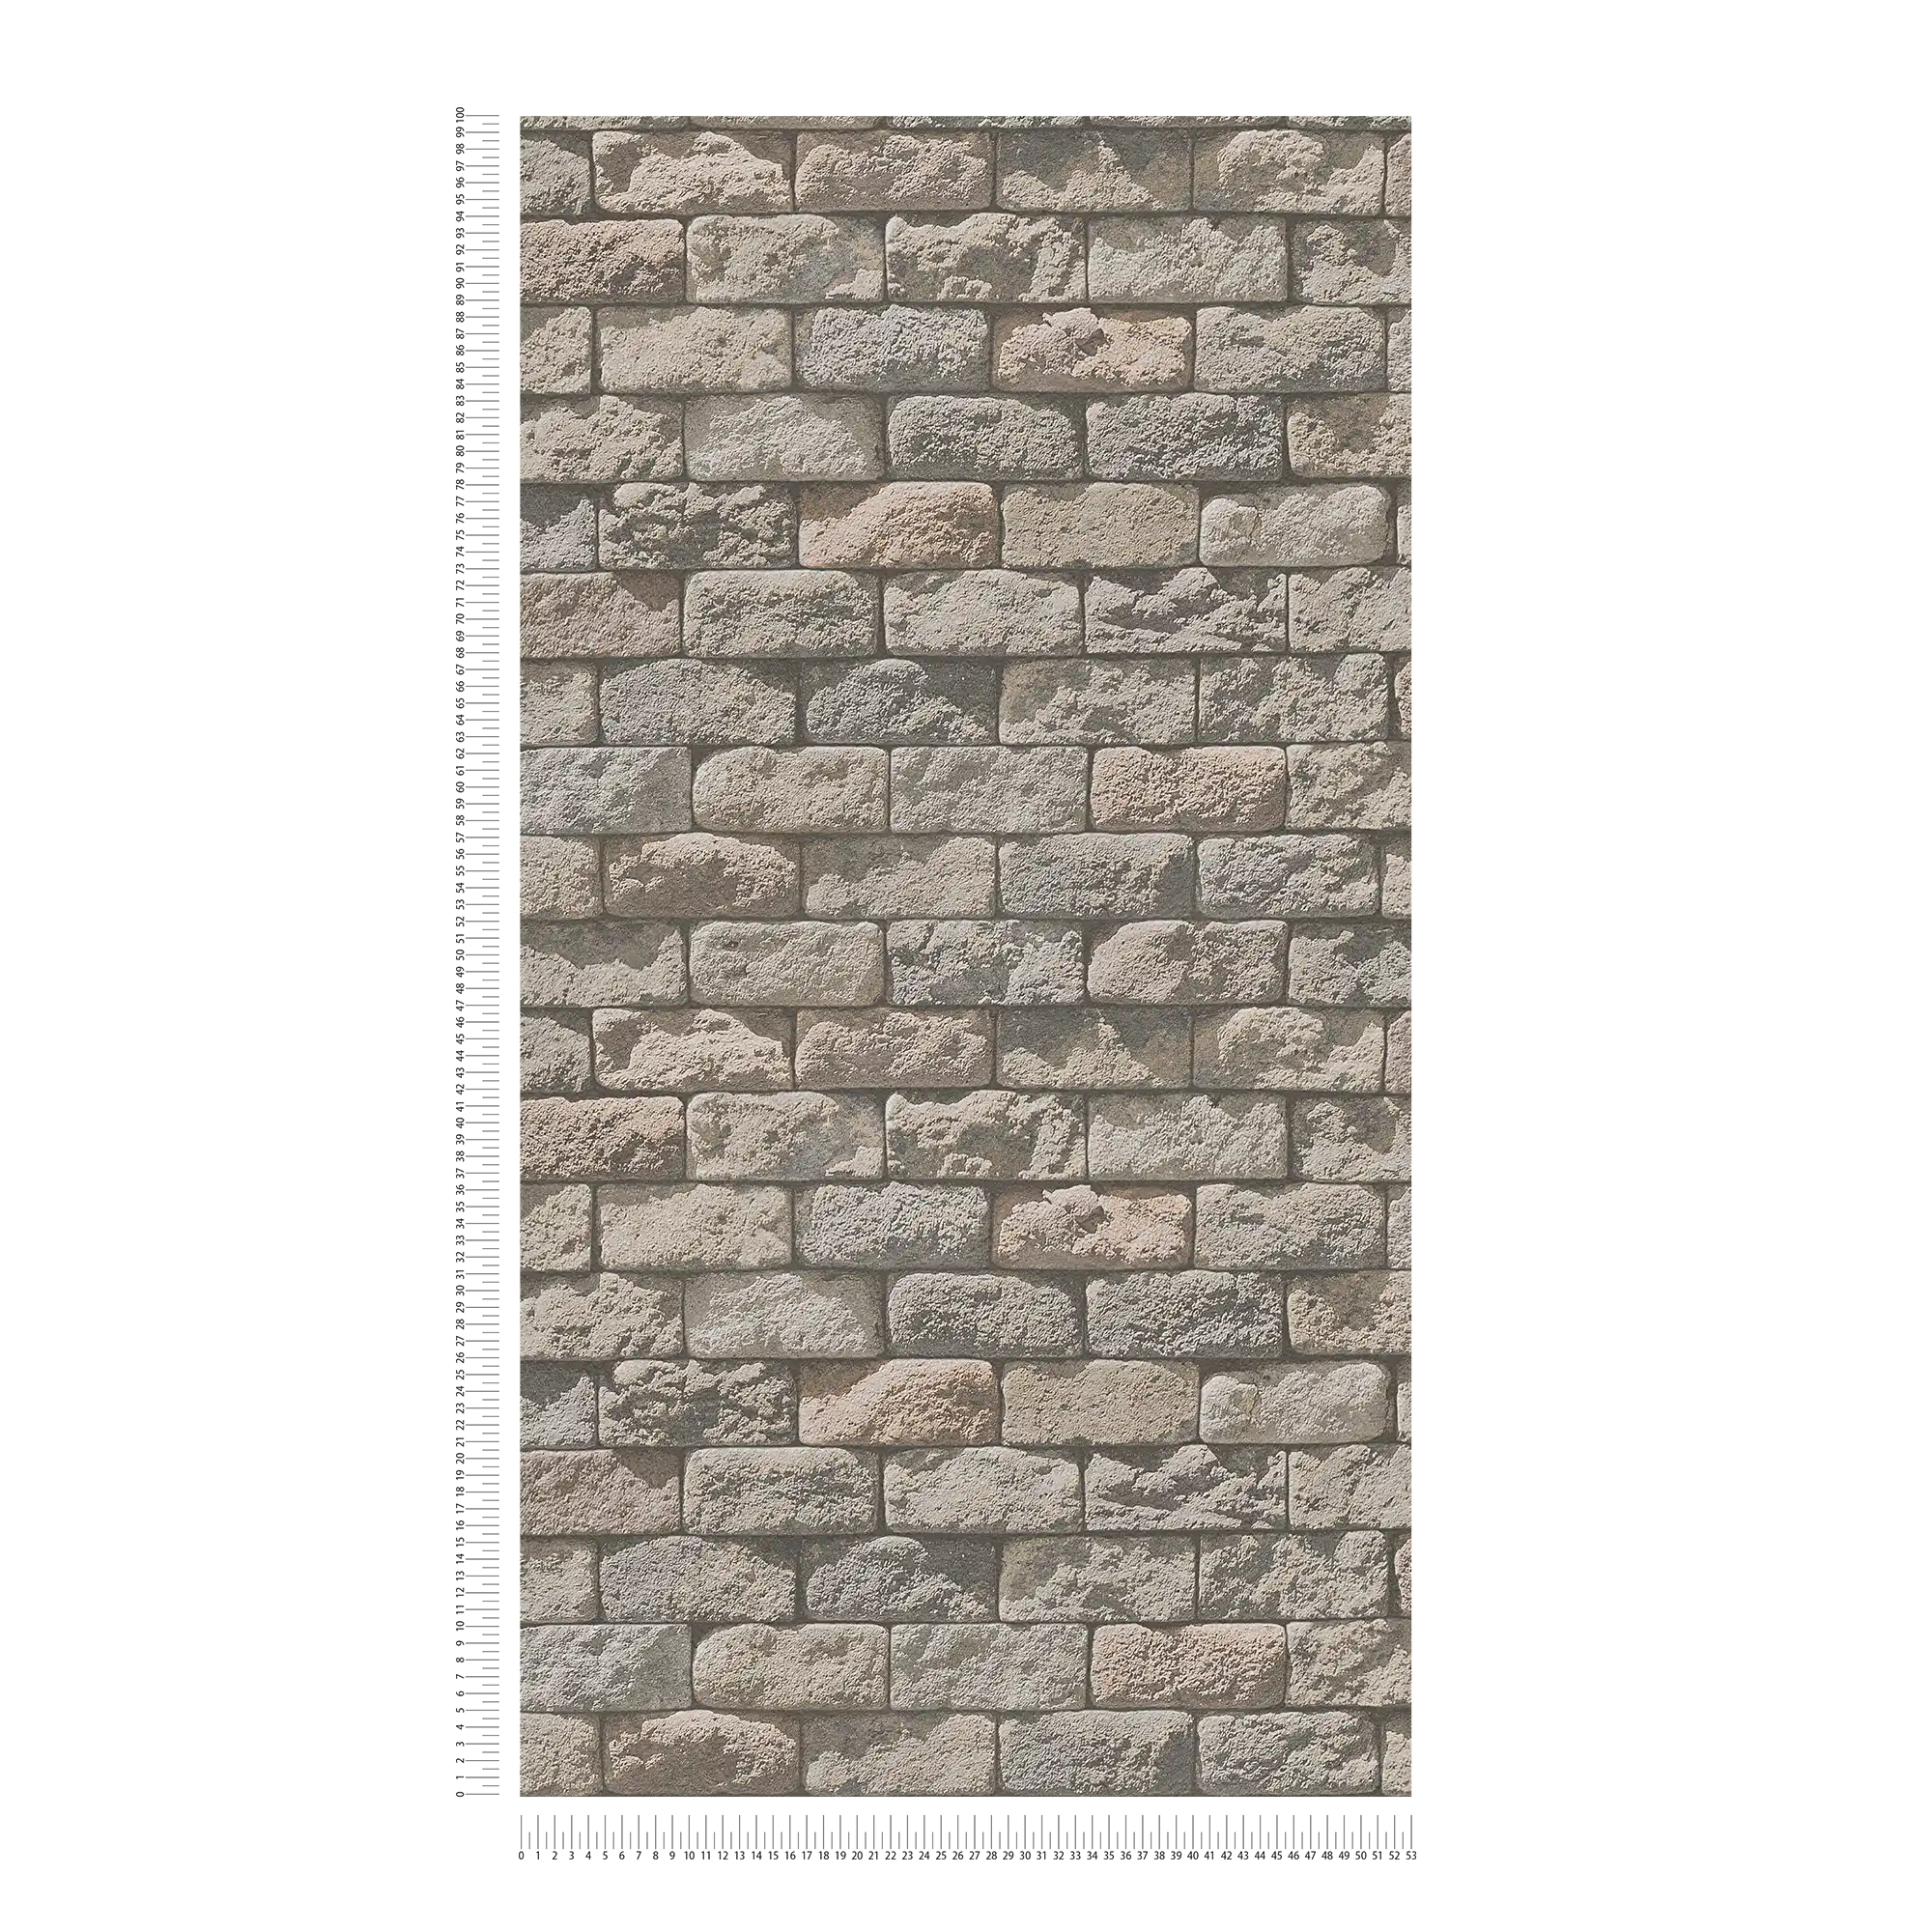             Stone wallpaper with masonry, shadows & 3D look - beige, cream
        